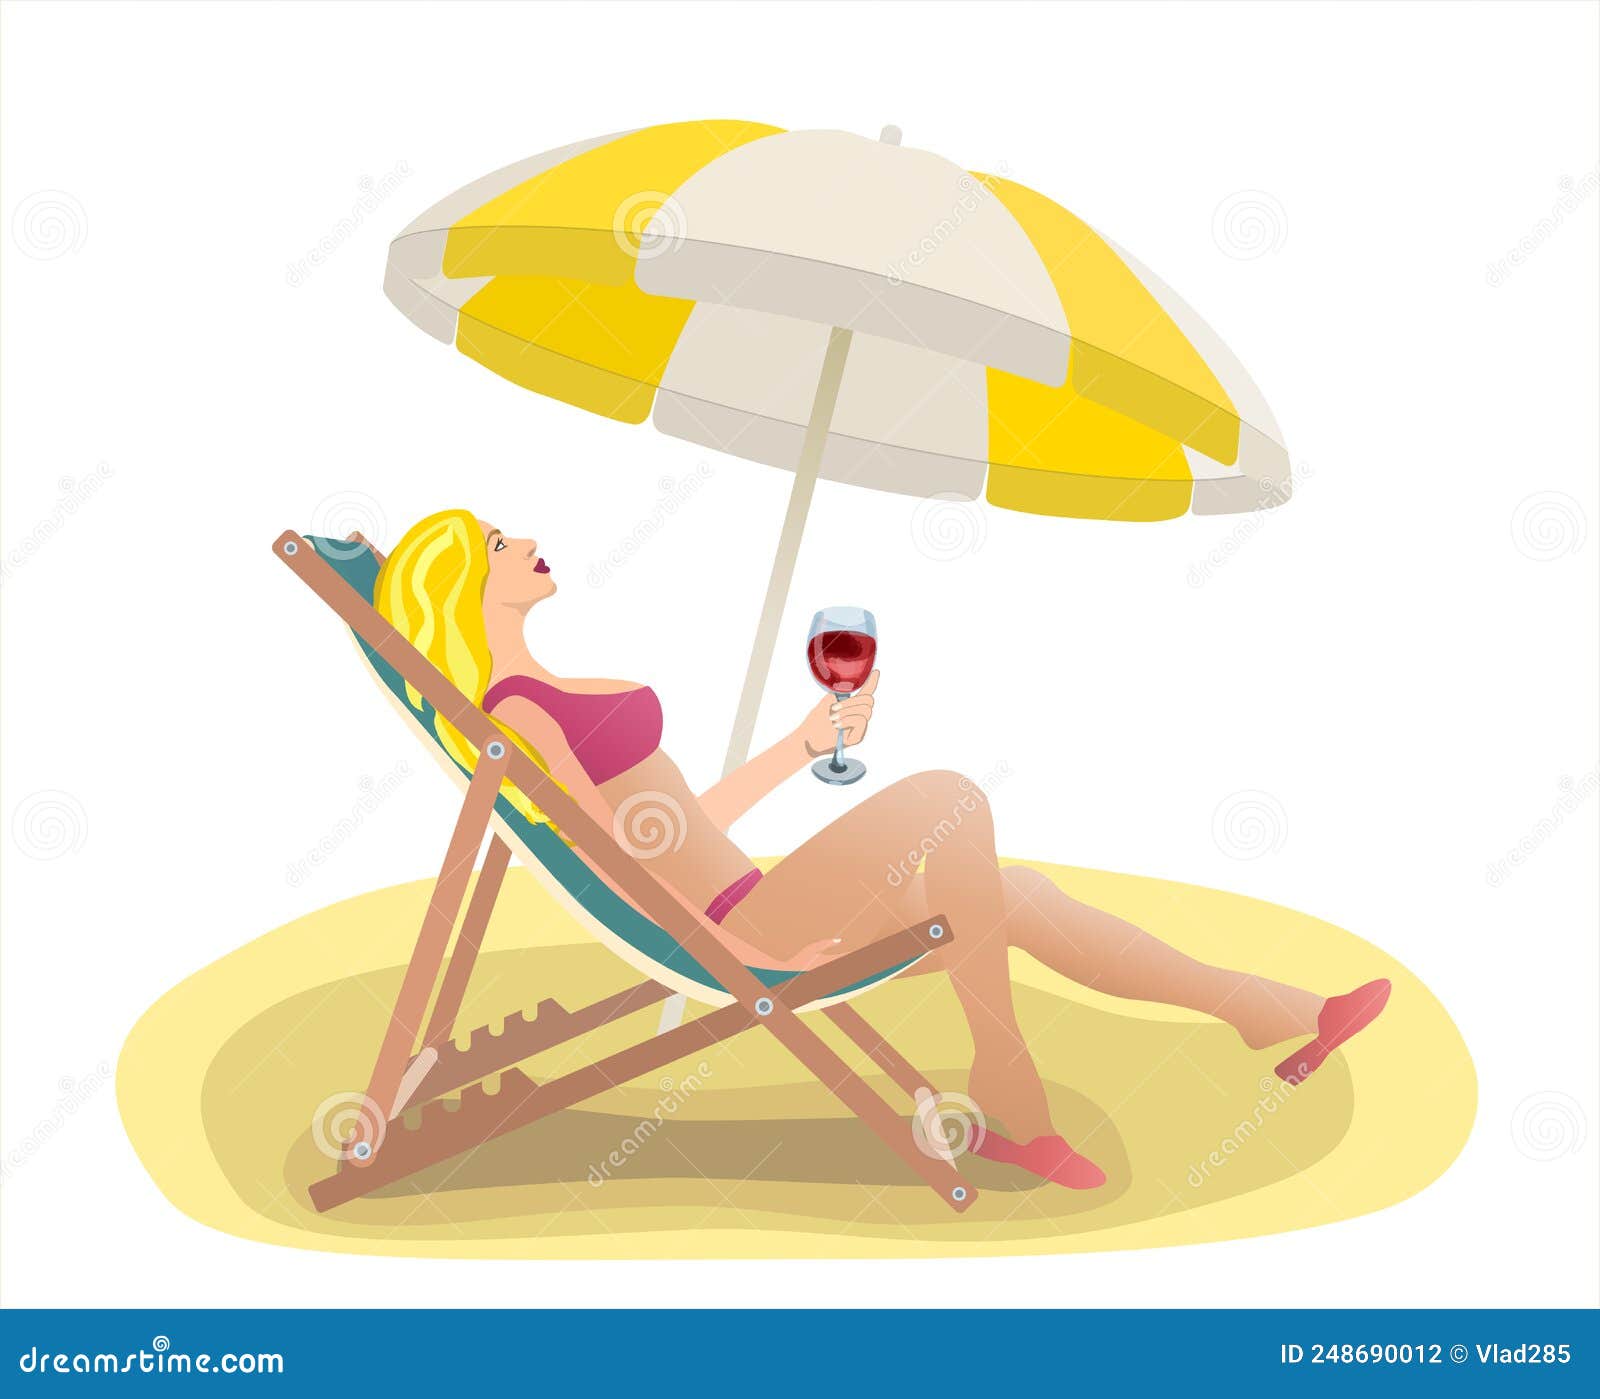 girl-beach-deck-chair-umbrella-248690012.jpg